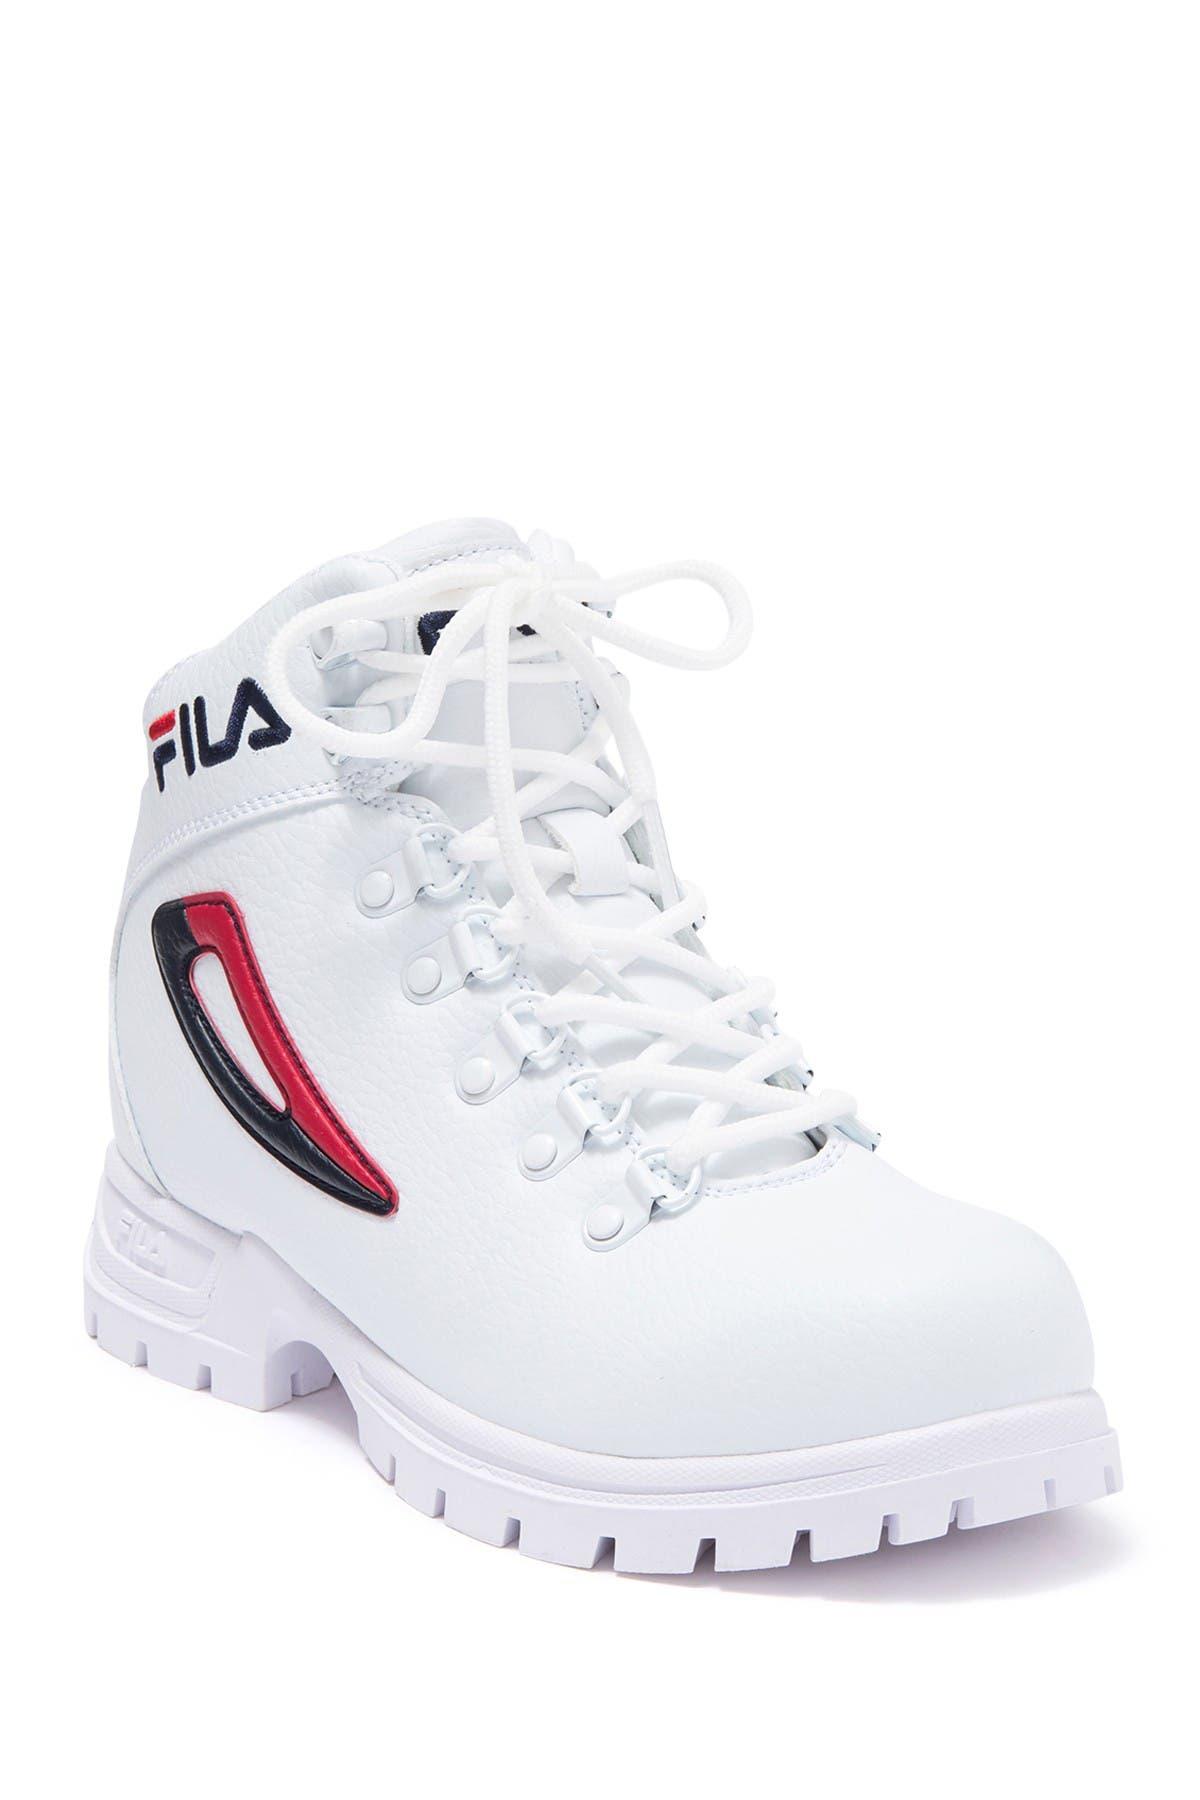 Buy fila hiking boot cheap online